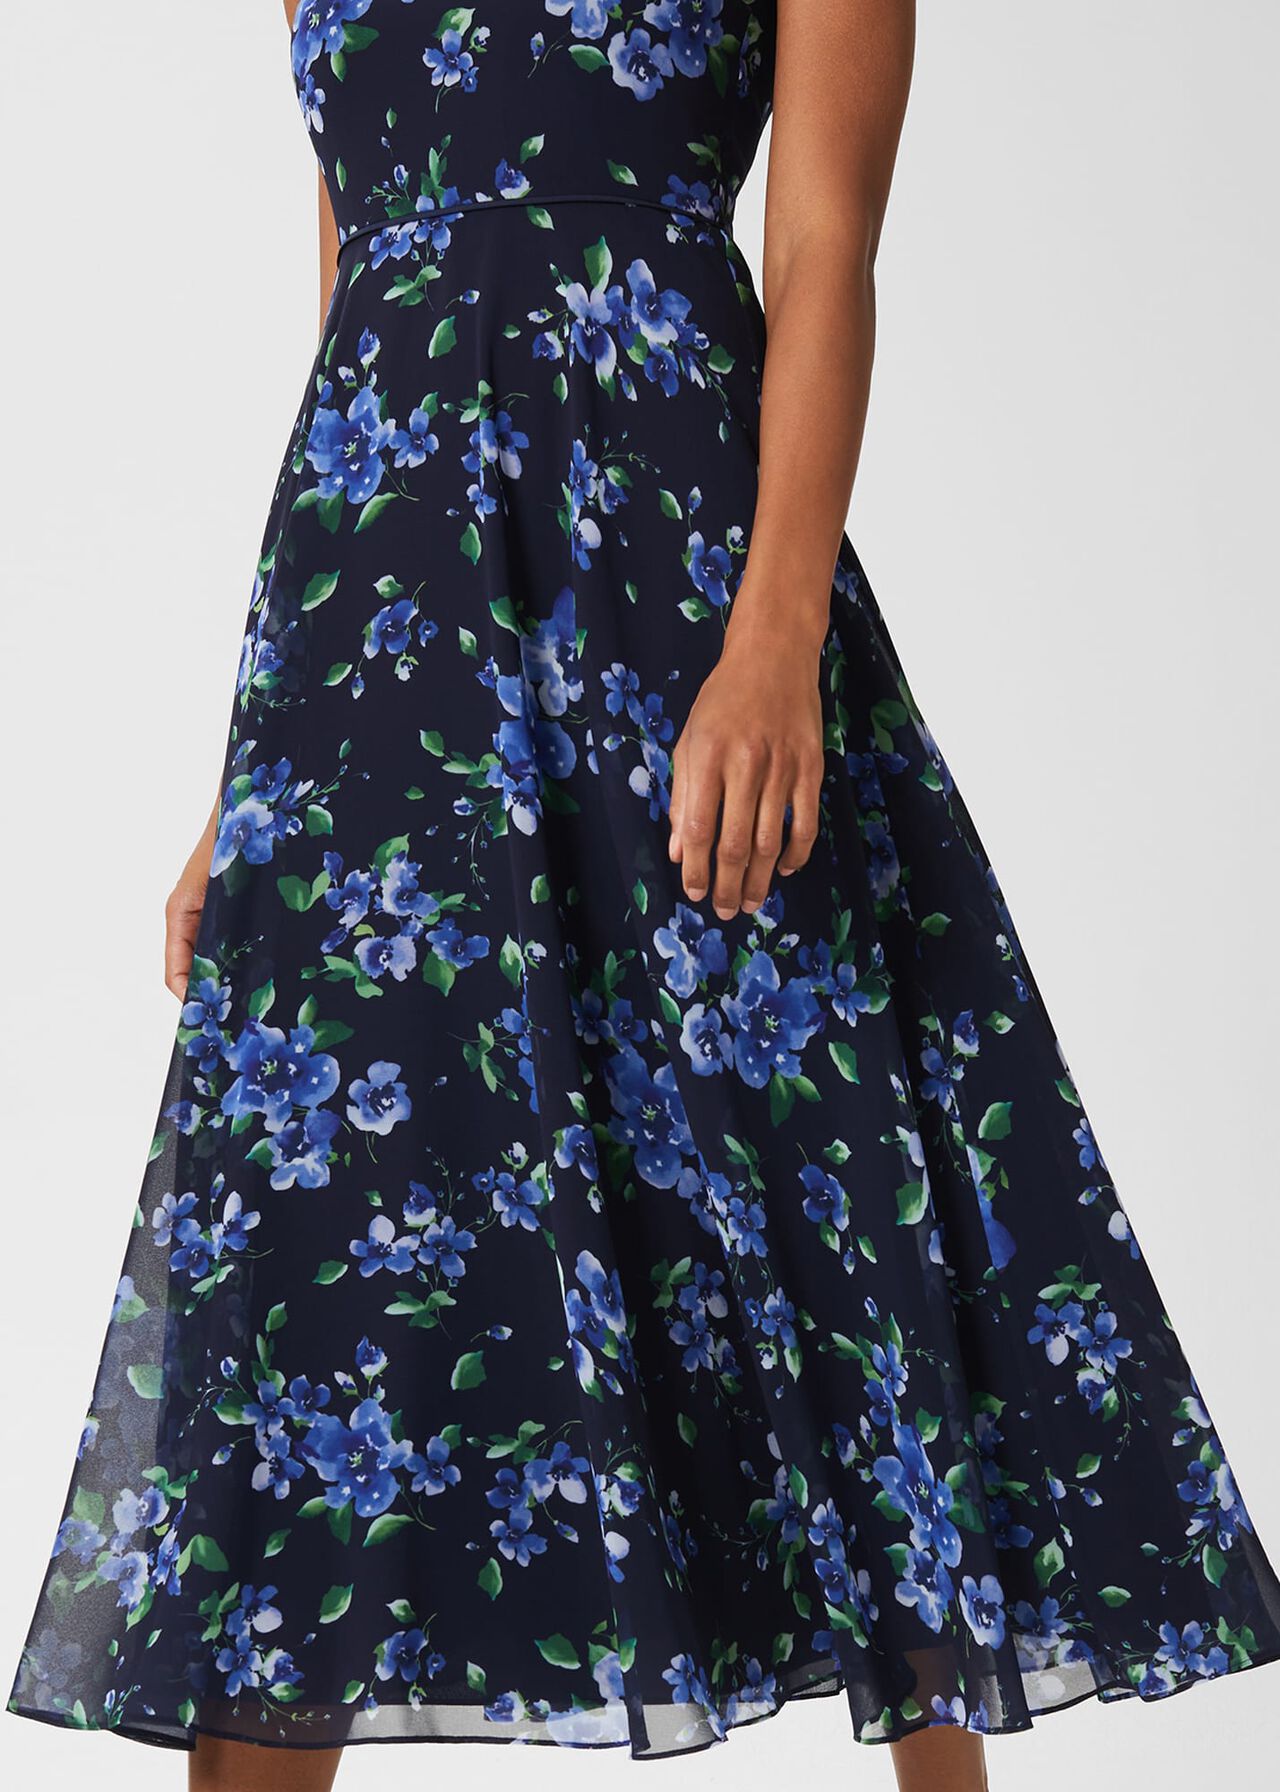 Carly Floral Midi Dress, Navy Blue, hi-res